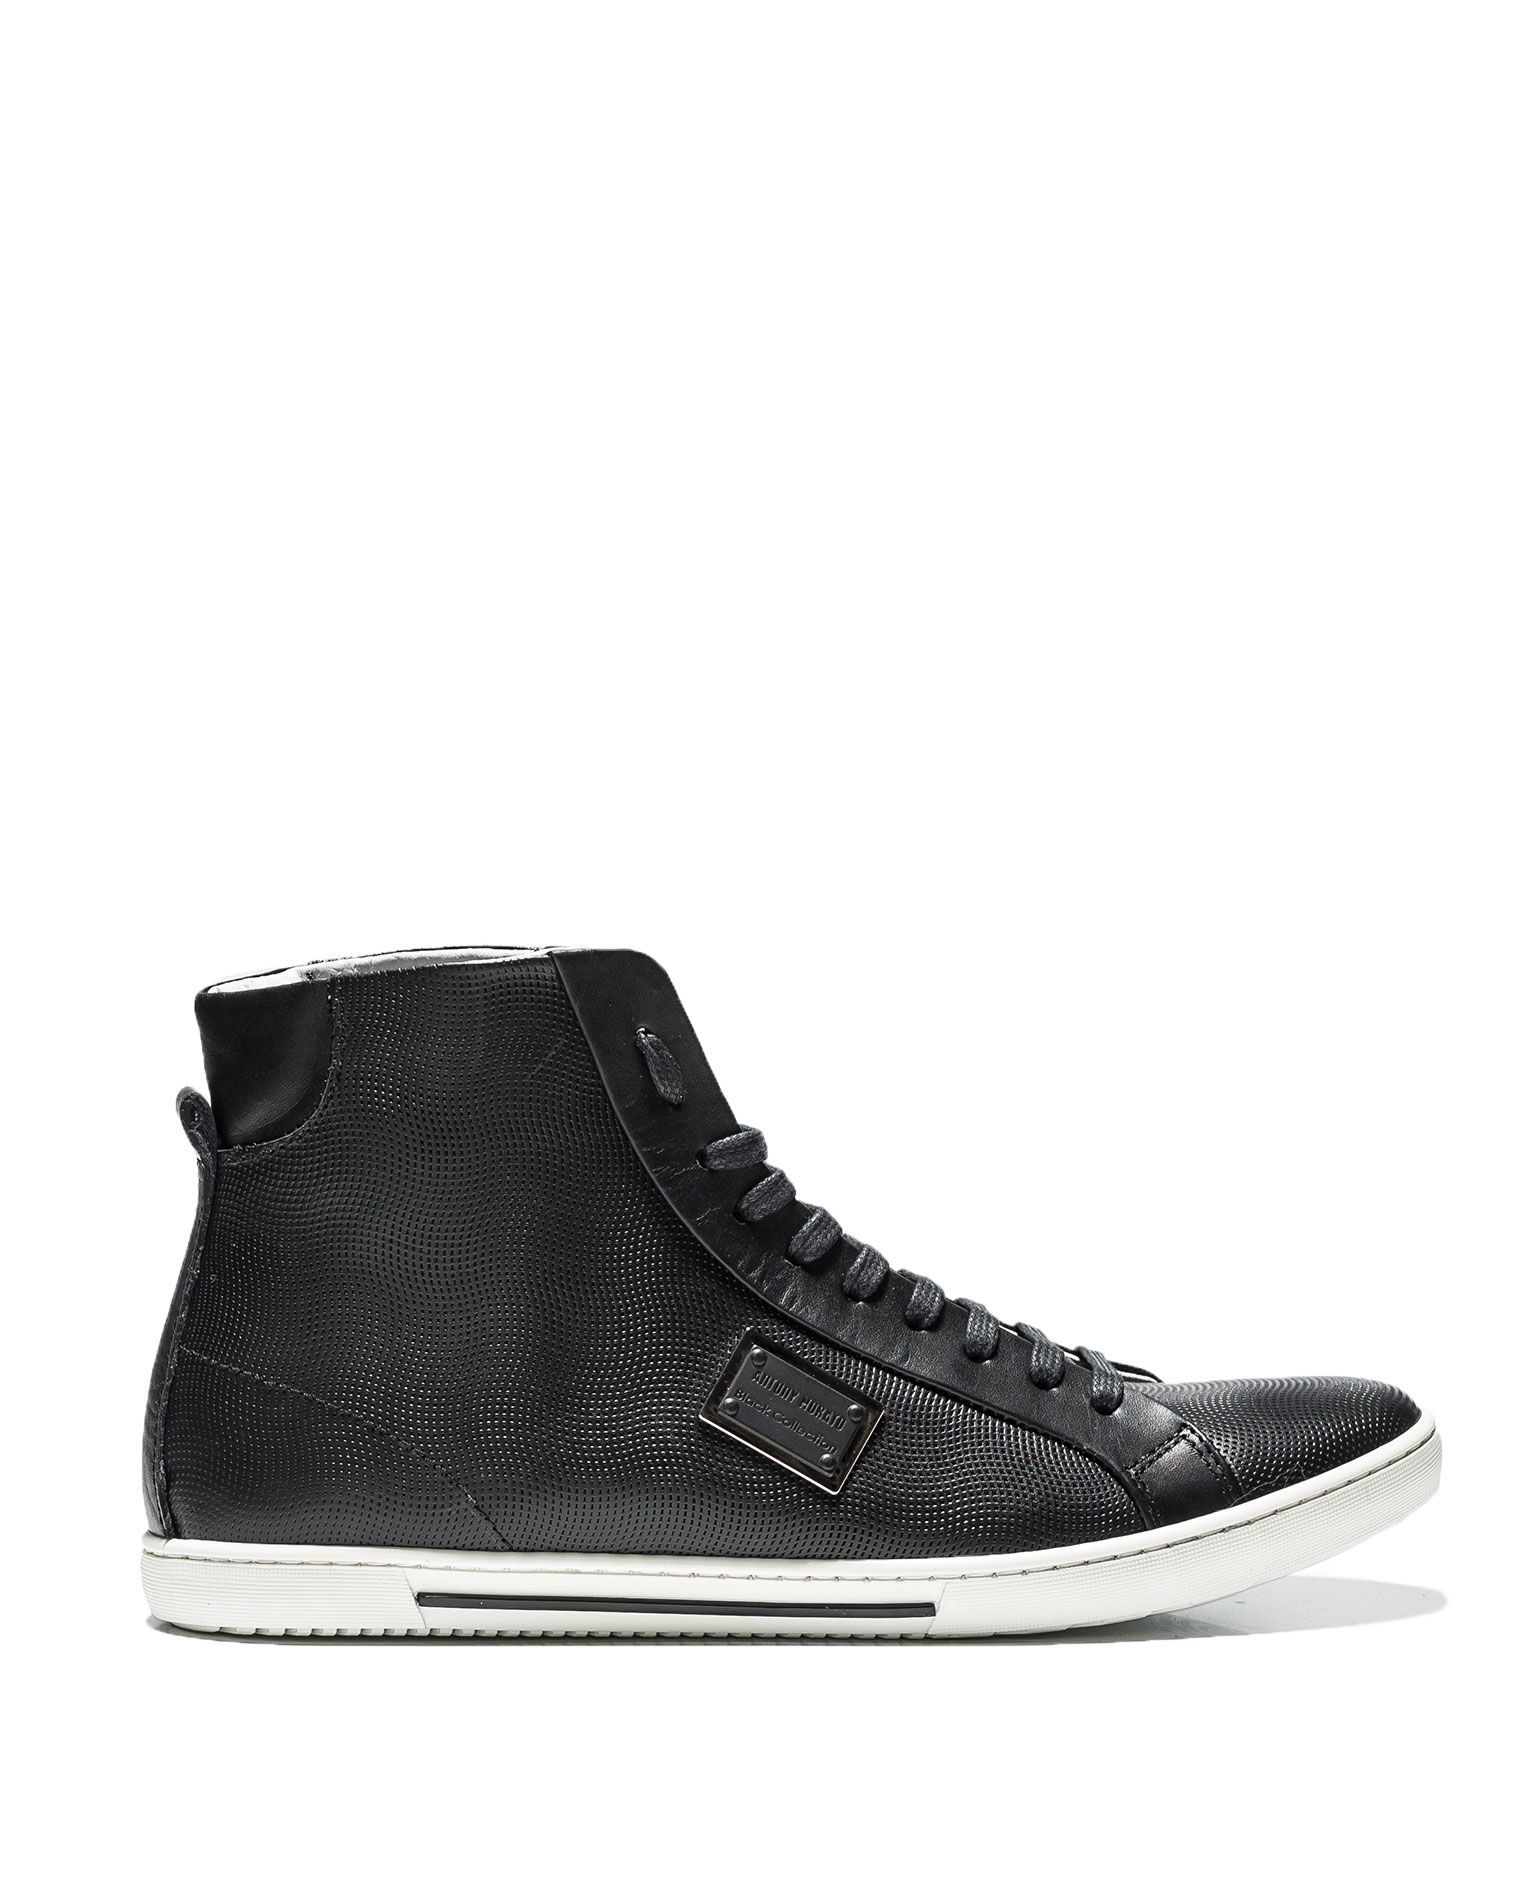 Black Shoes Antony Morato - 9009 - Trashbin - Jerone.com